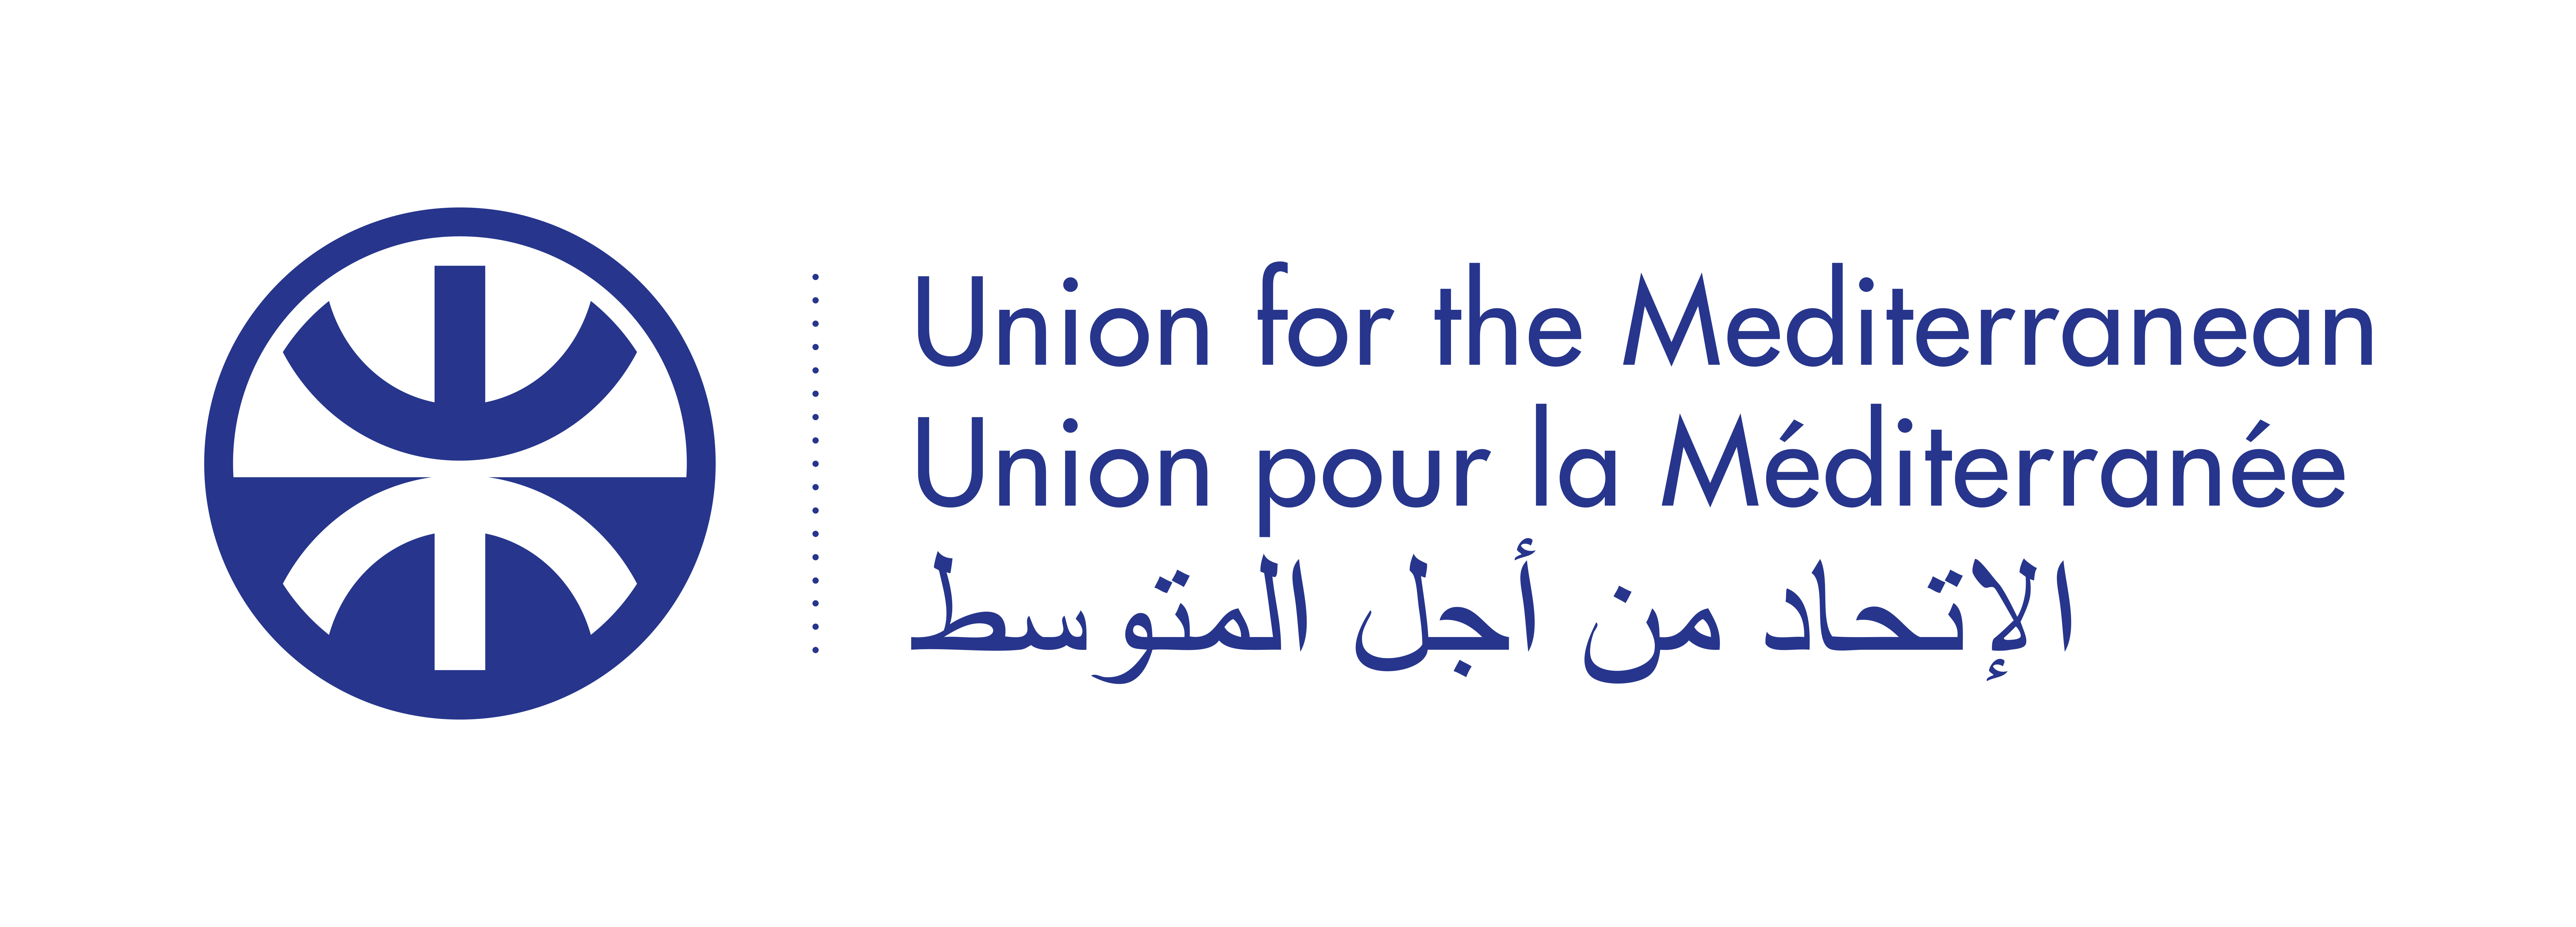 Union for the Mediterranean (UfM)